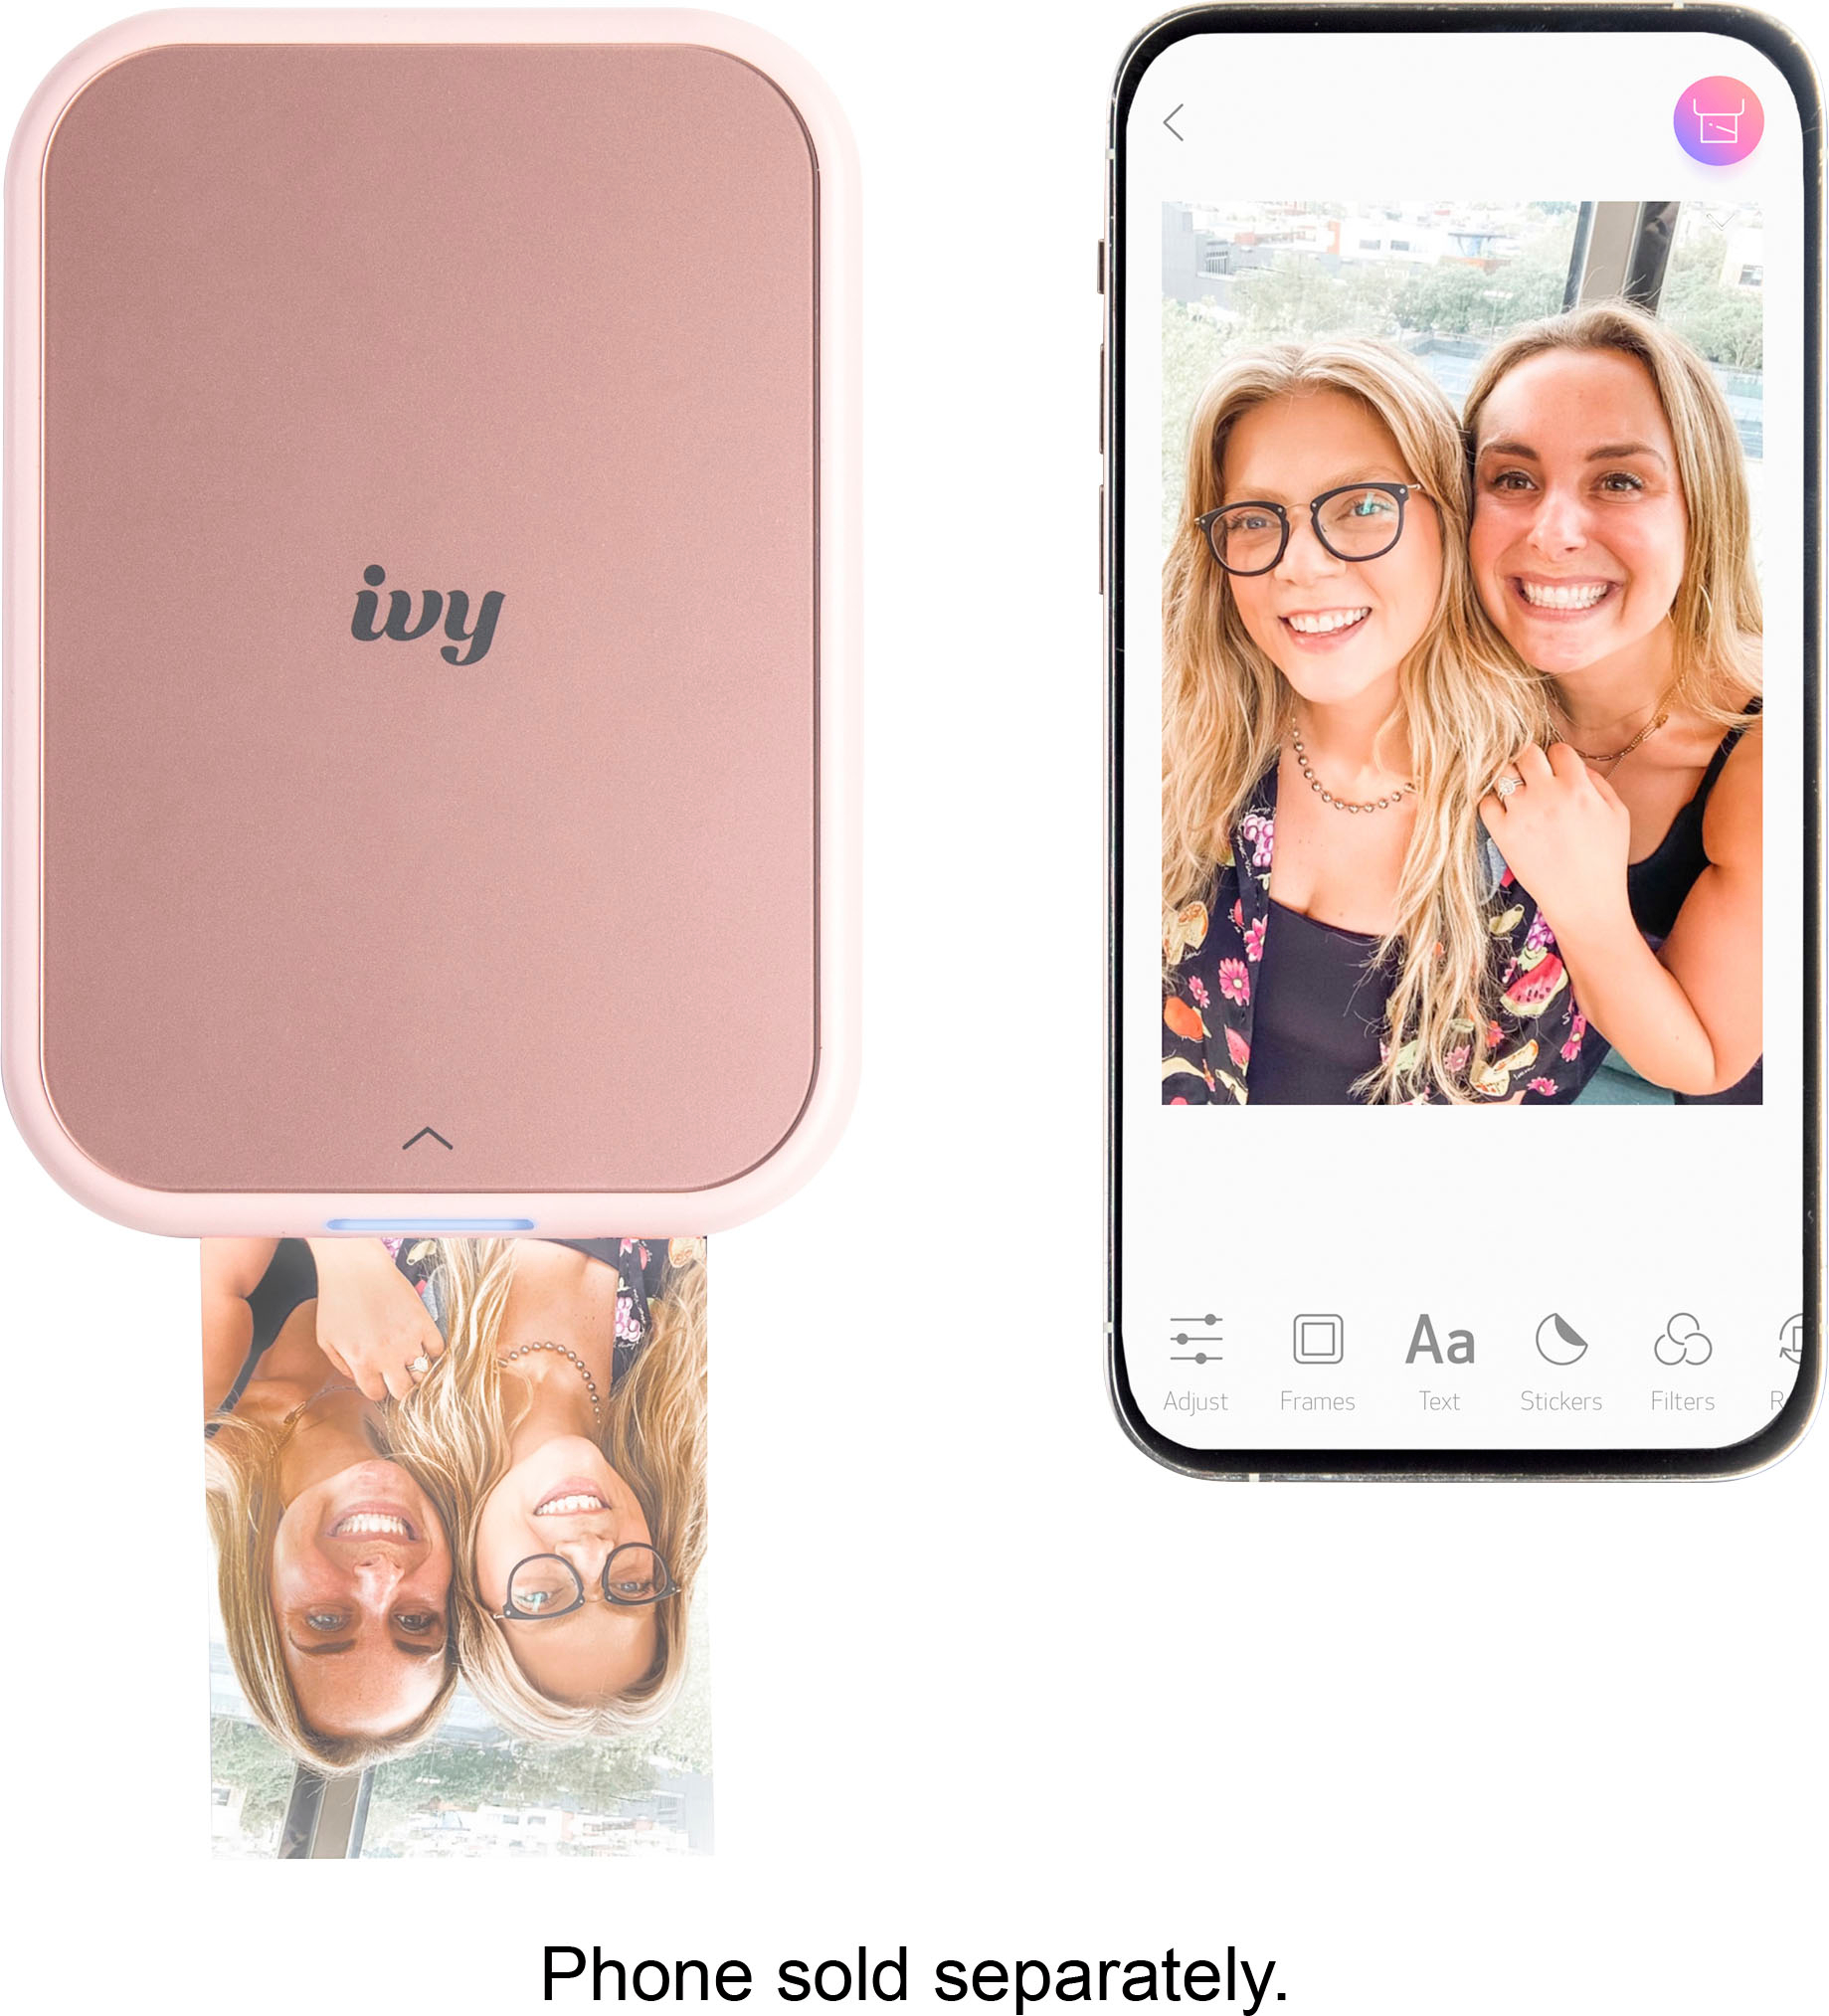 Canon Ivy 2 Mini Photo Printer - Pink : Target